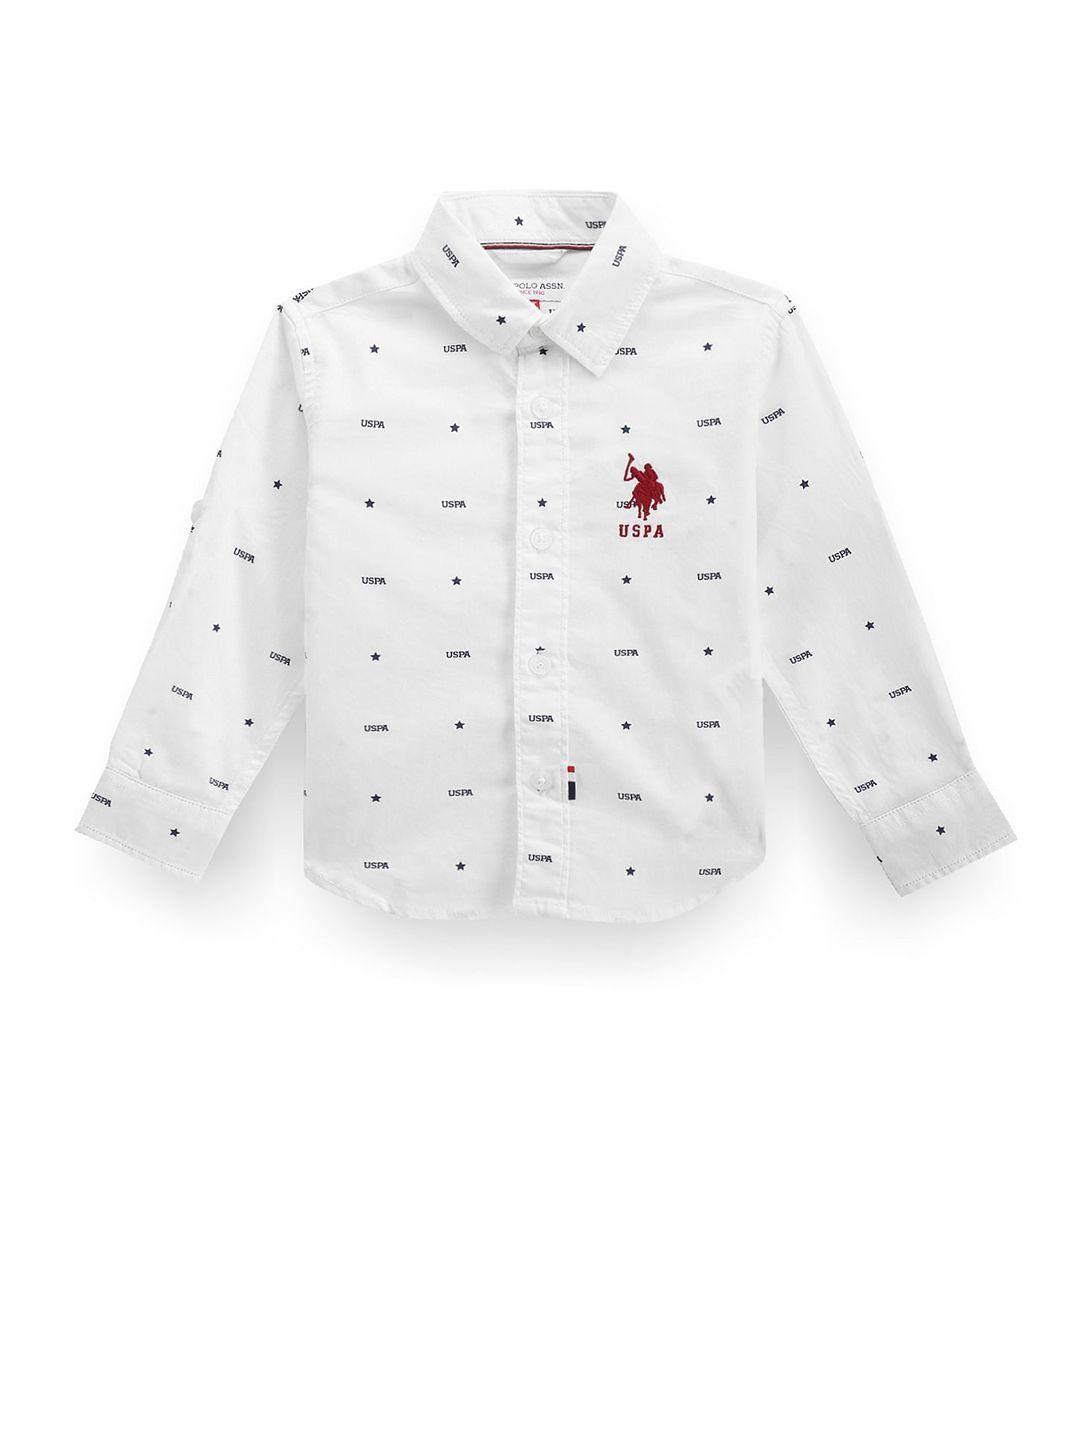 u.s. polo assn. kids boys classic typography print twill spread collar cotton casual shirt